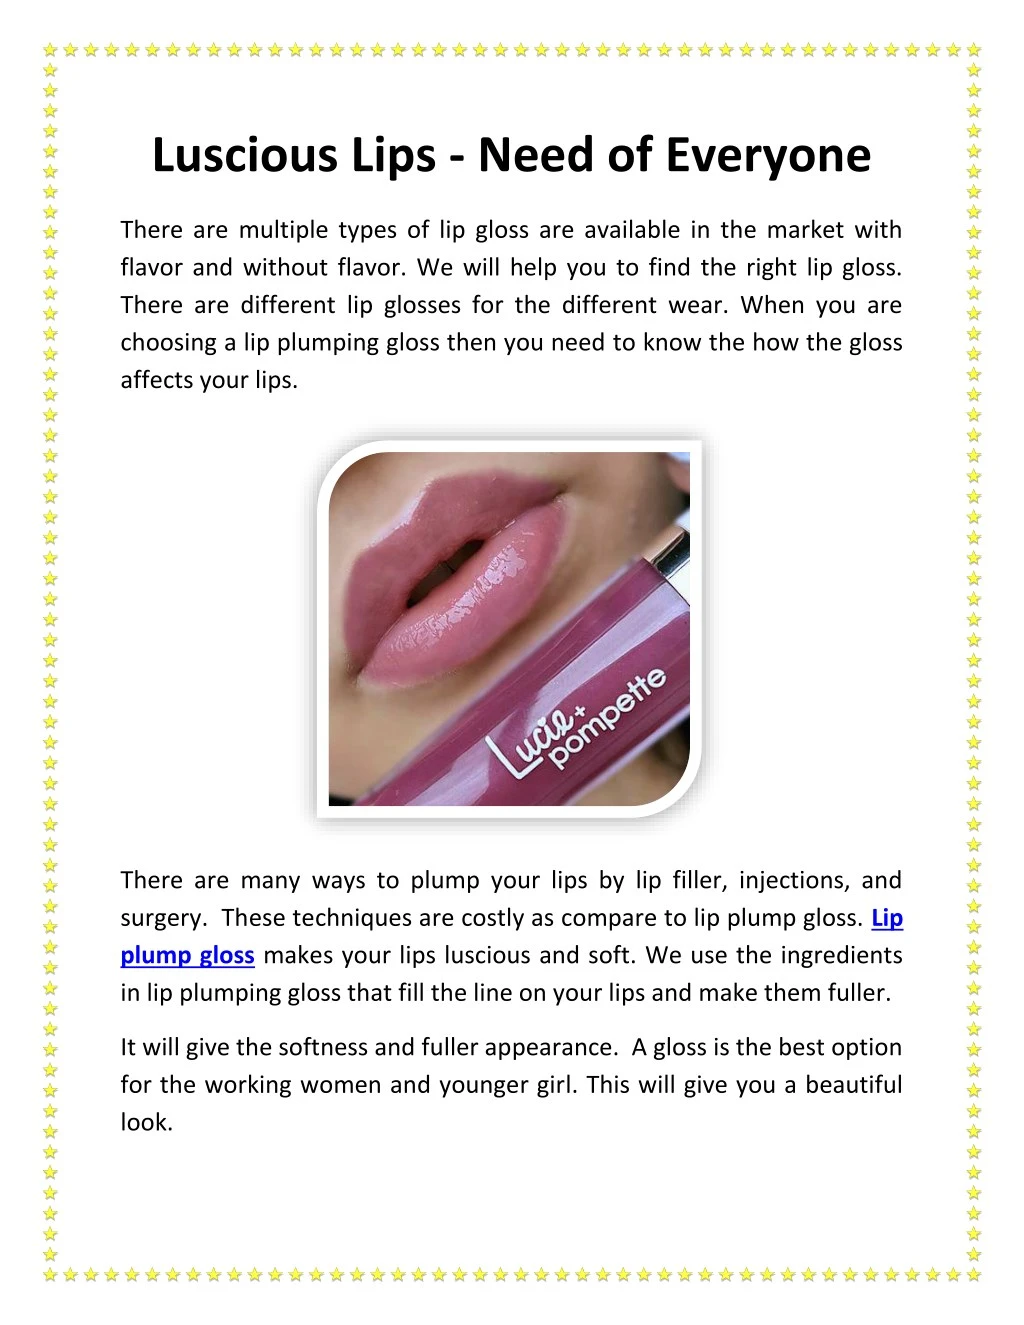 luscious lips need of everyone